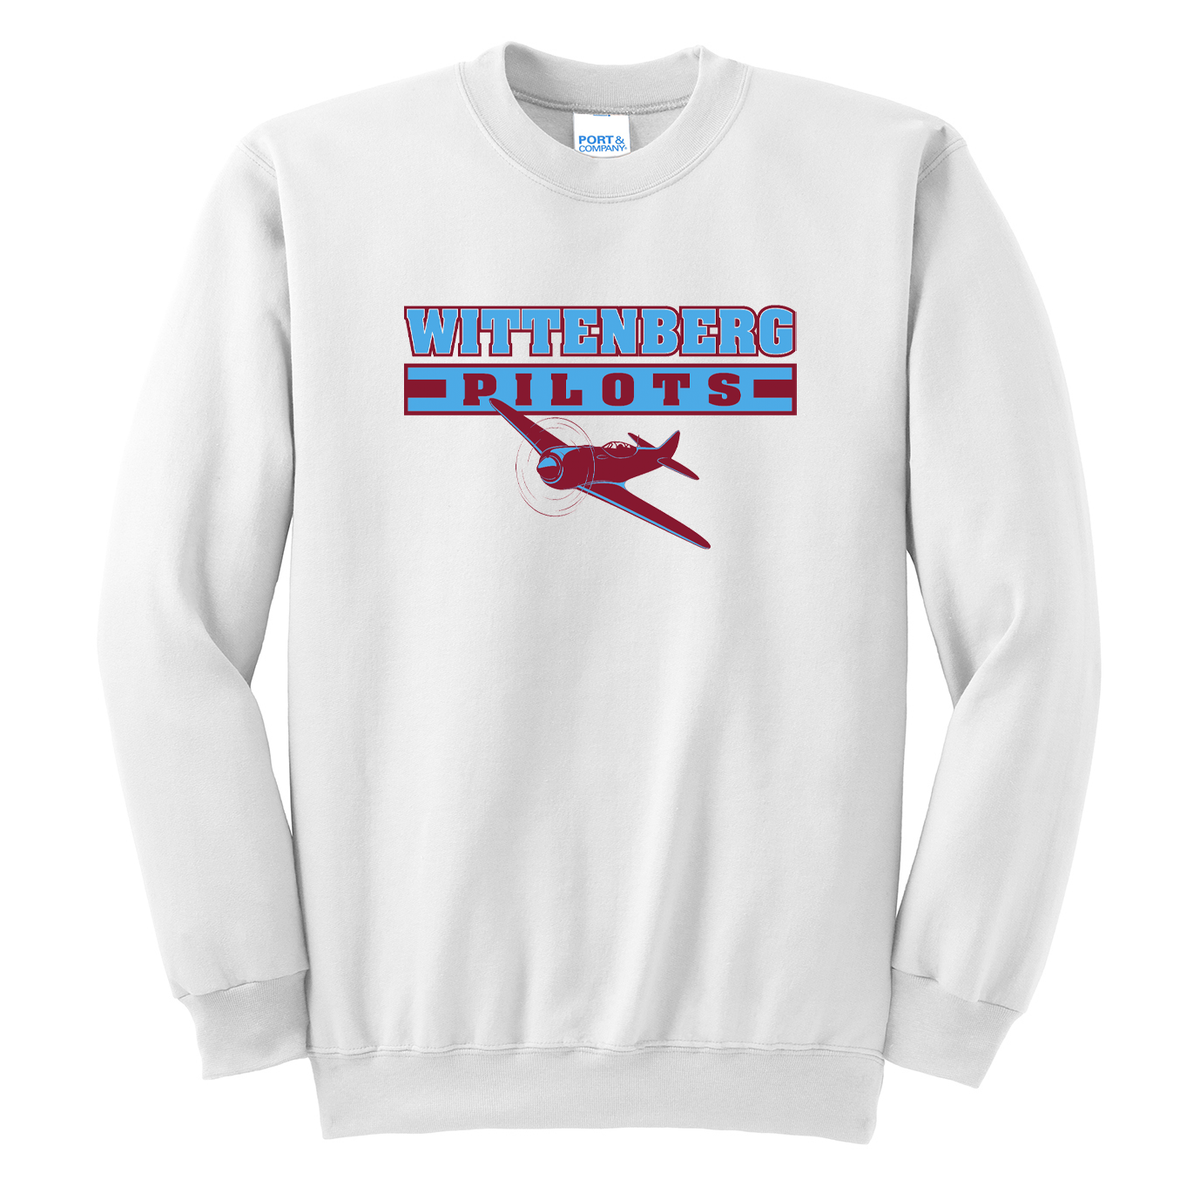 Wittenberg Pilots Baseball Crew Neck Sweater